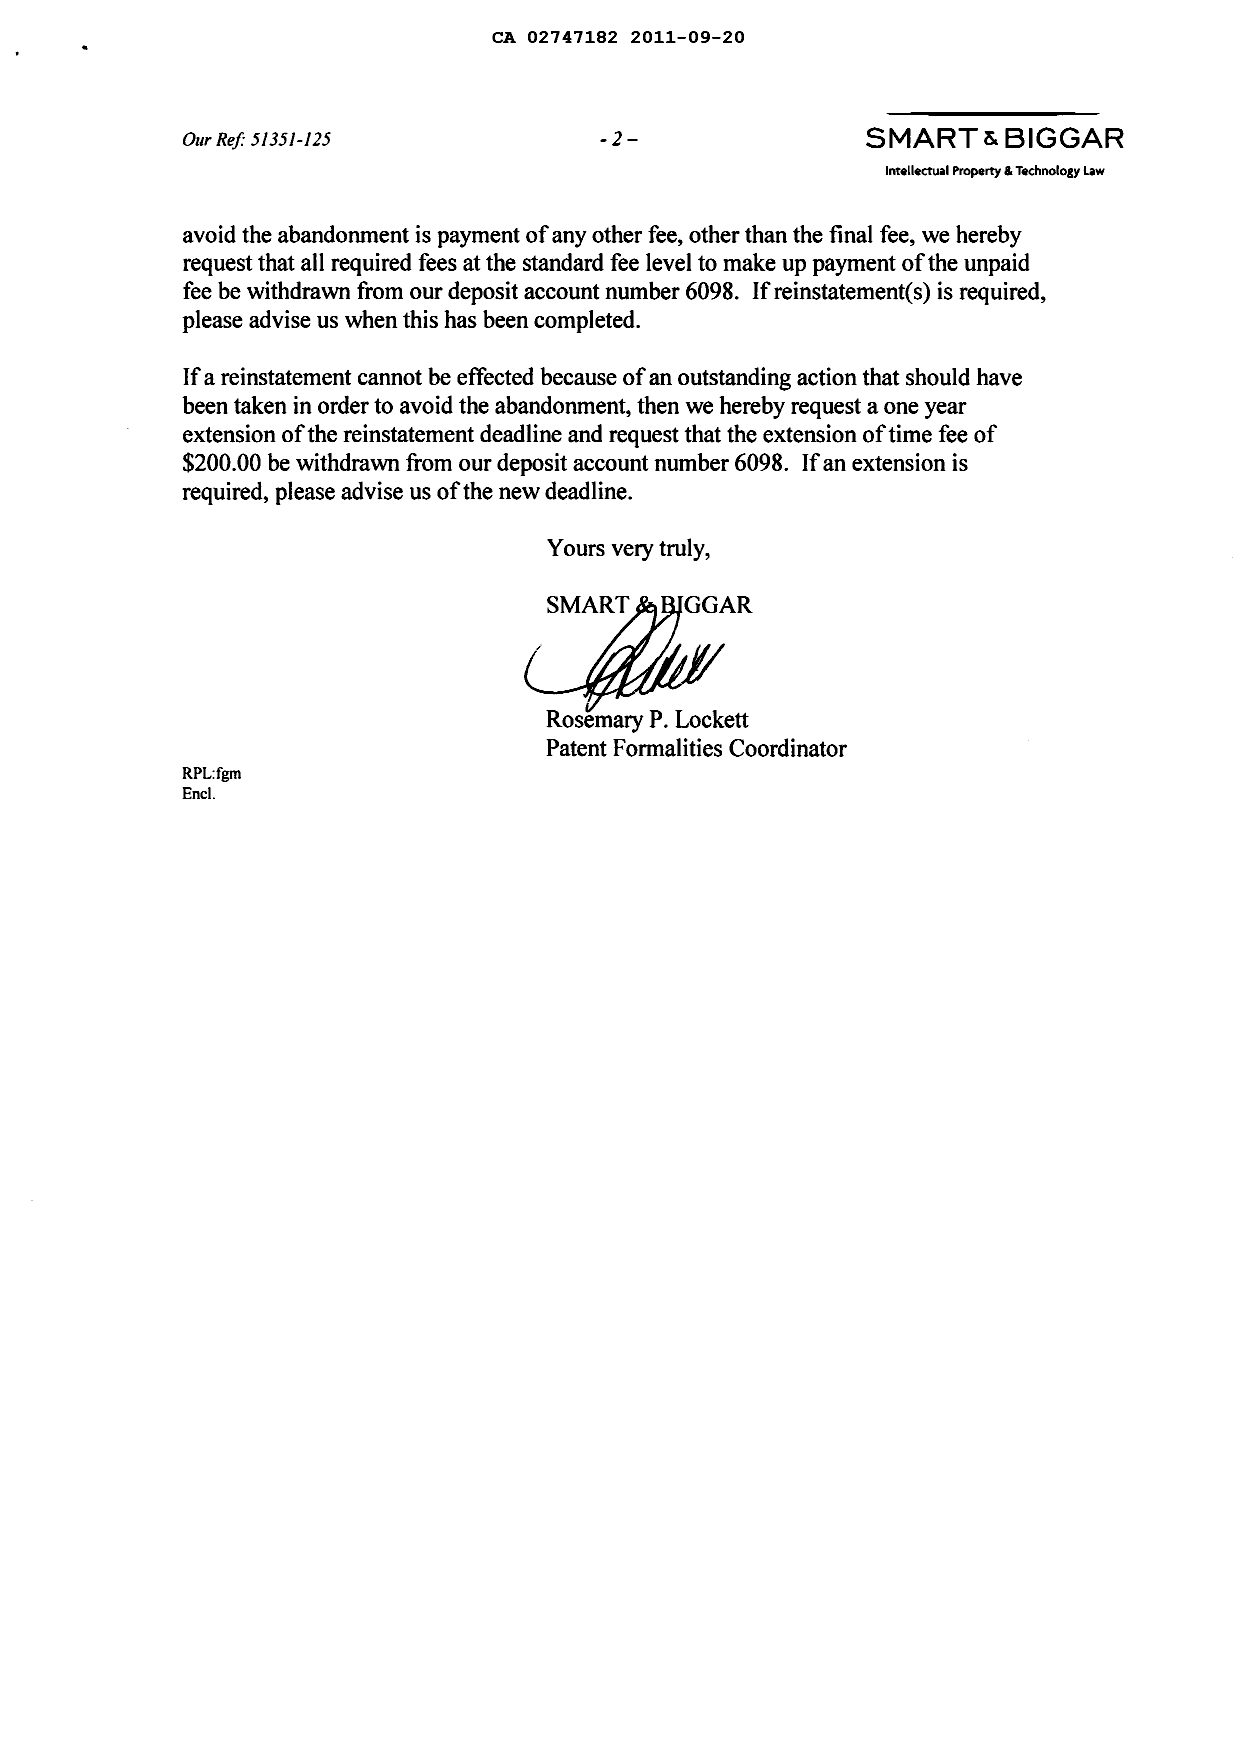 Canadian Patent Document 2747182. Correspondence 20110920. Image 2 of 3